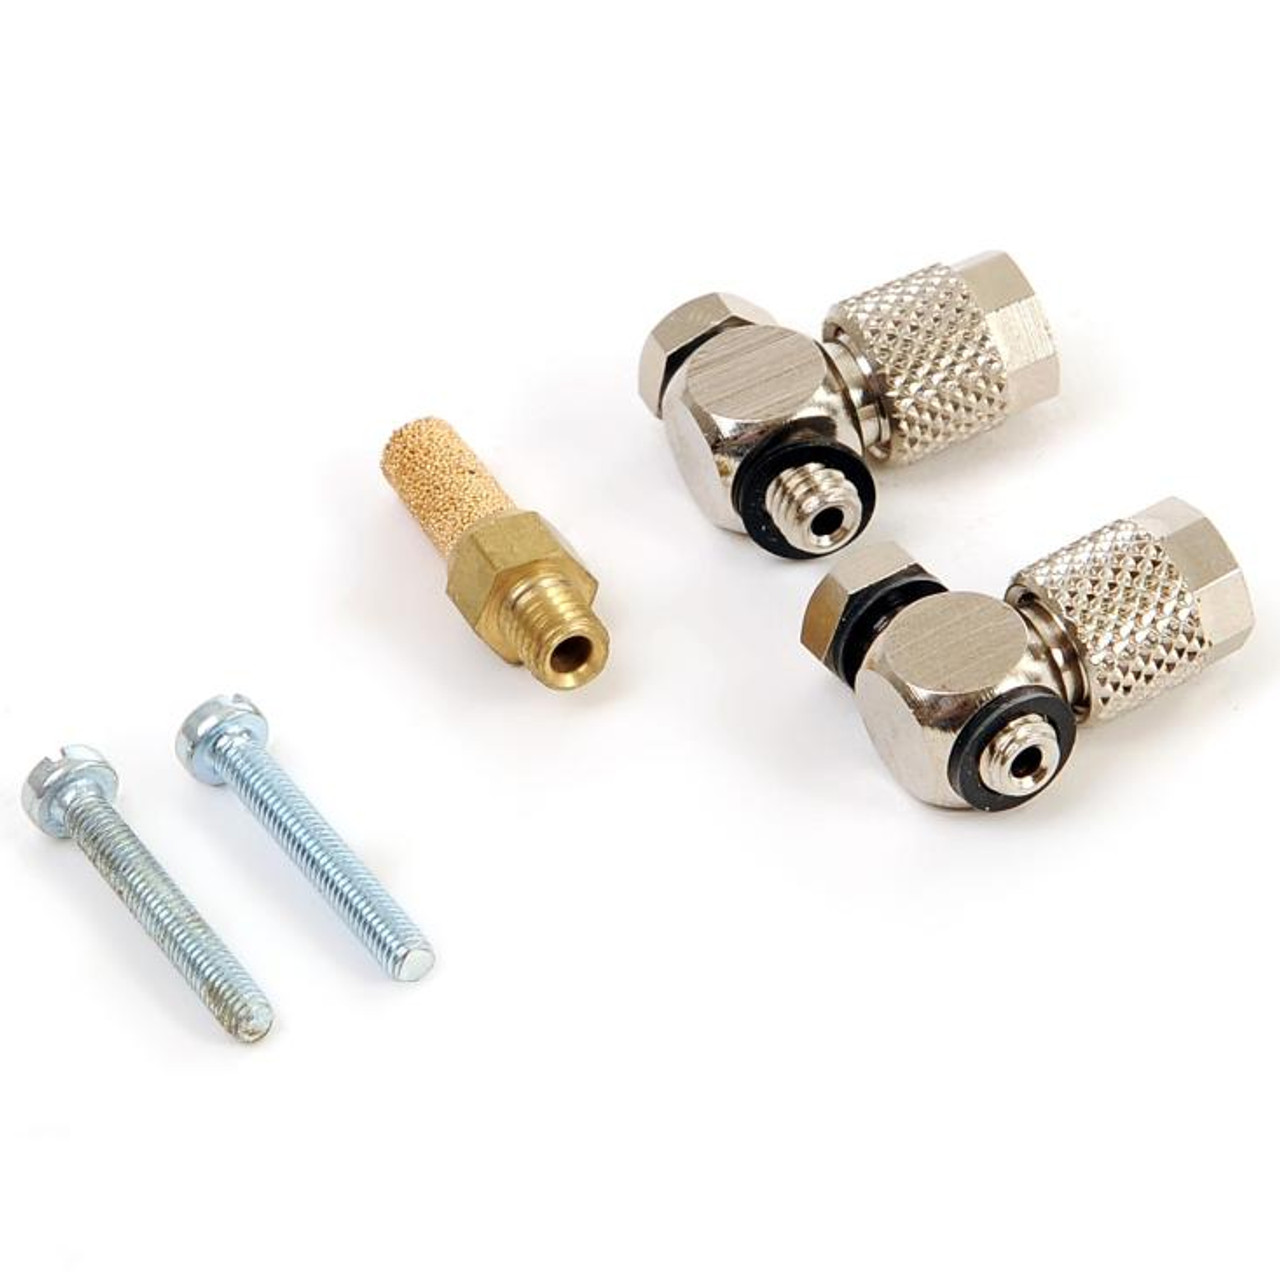  Blum VERSCHR+ZUT Small parts valve for MINIPRESS P Item Number 09093960 